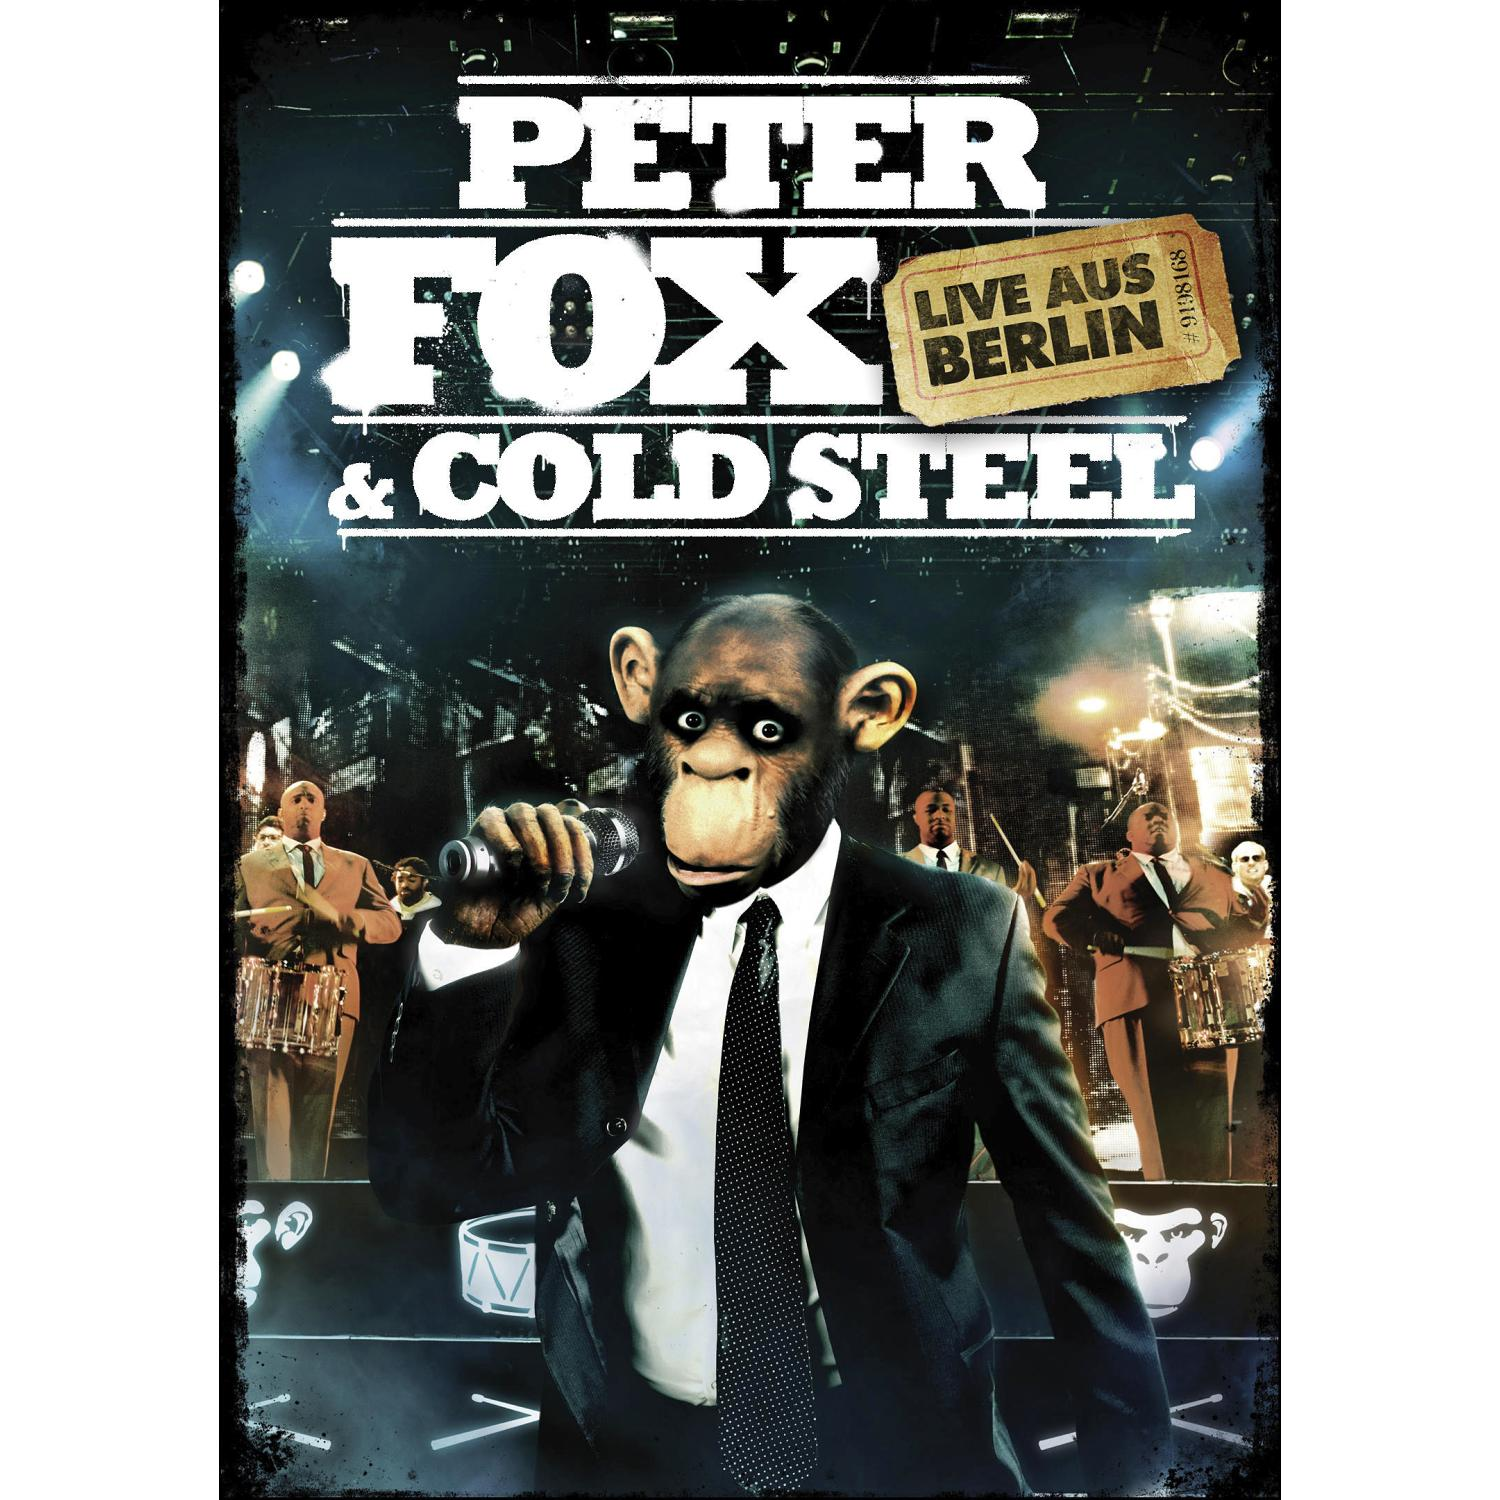 Peter Fox & - aus Cold (DVD) Steel Berlin - Live